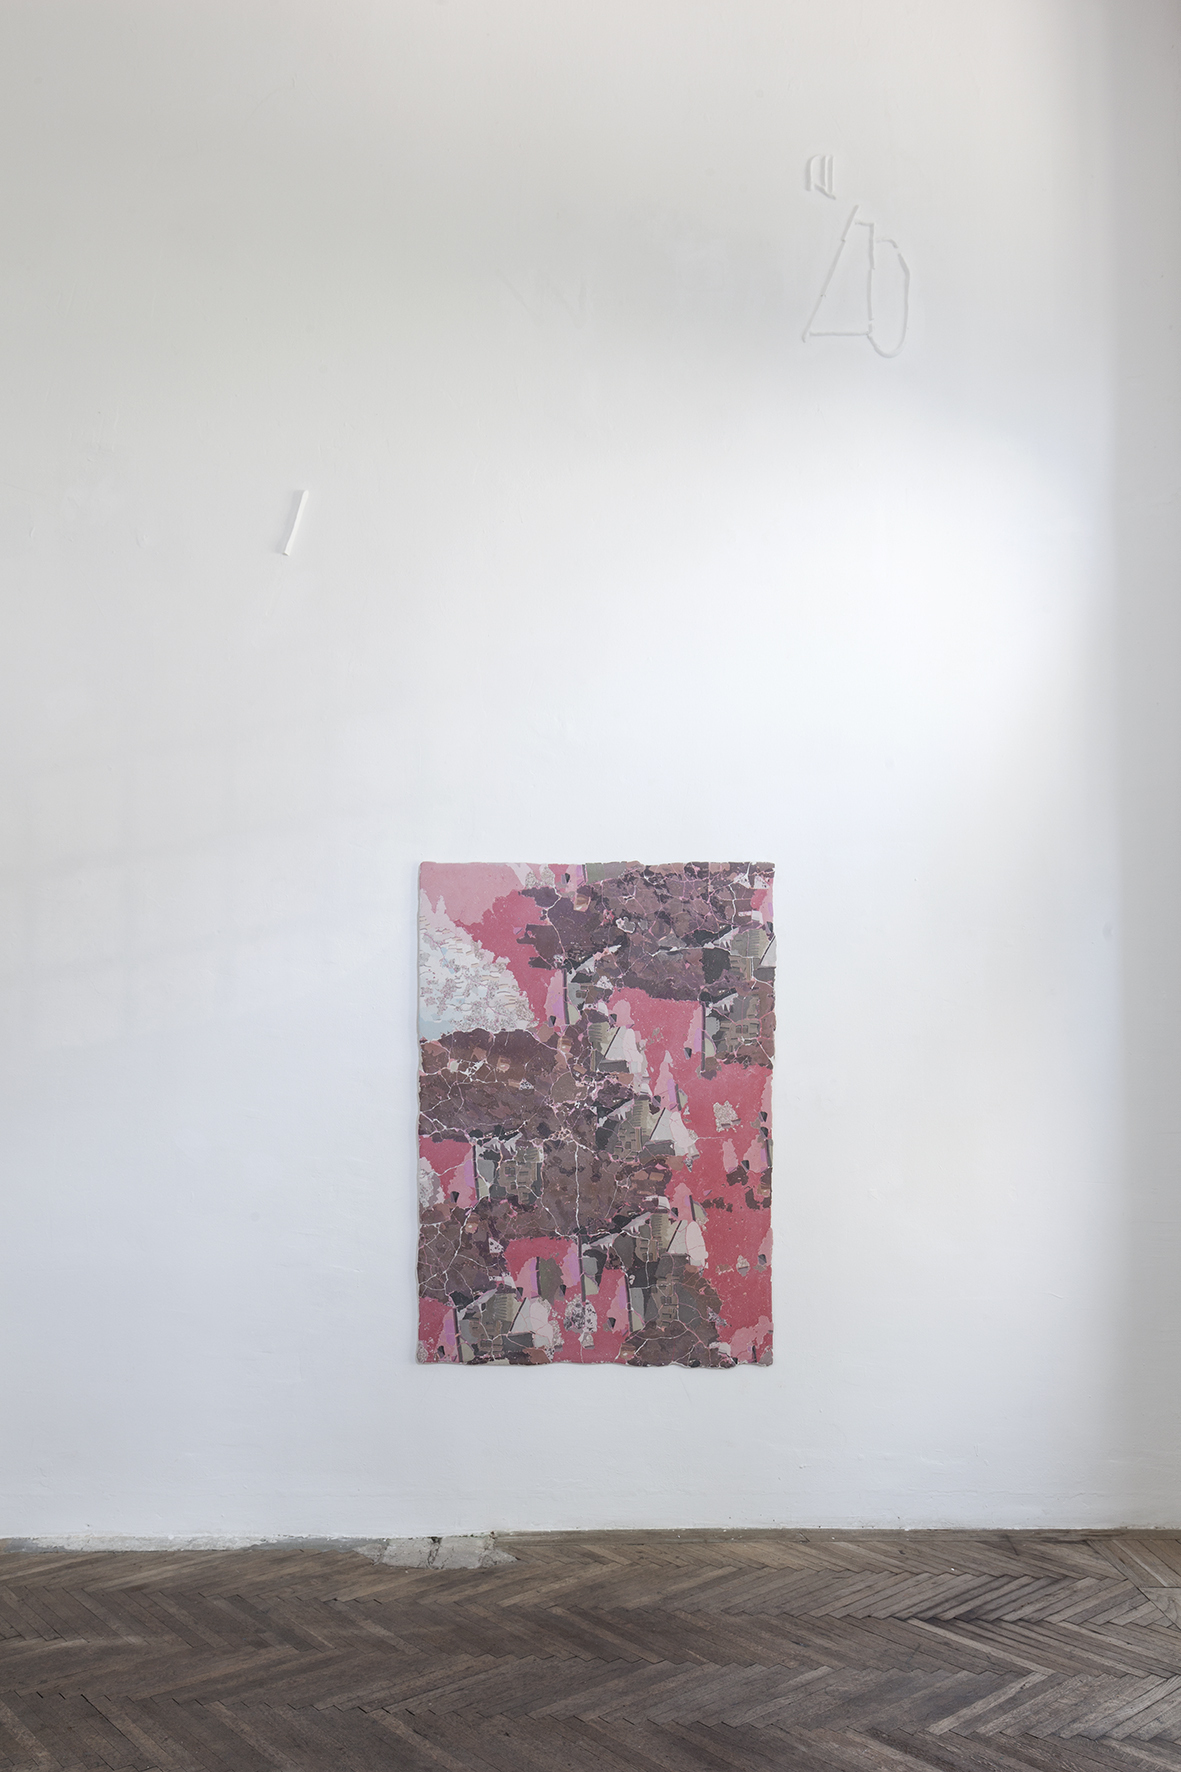 Heti Prack, World Fire, 2021, 142 x 102 cm, Gypsum, pigments, bone glue